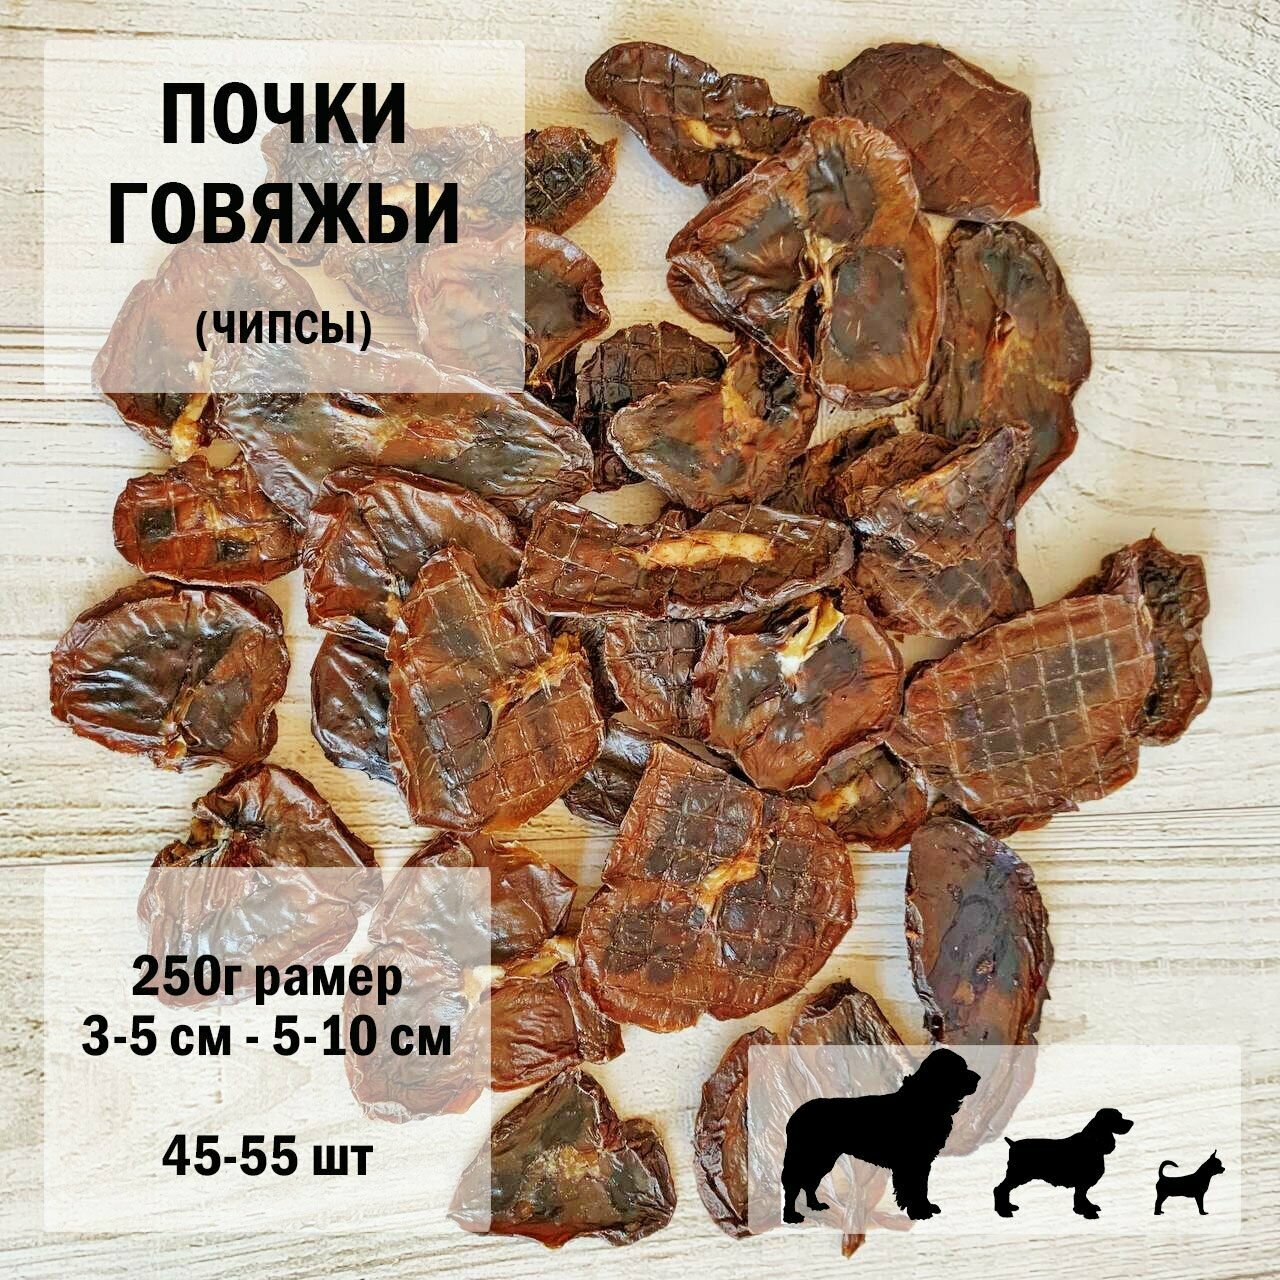 Почки для собак говяжьи 250г/ чипсы 45-55 шт/ размер 3-5 х 5-10 см/ Dog's Аppetite, 3 уп